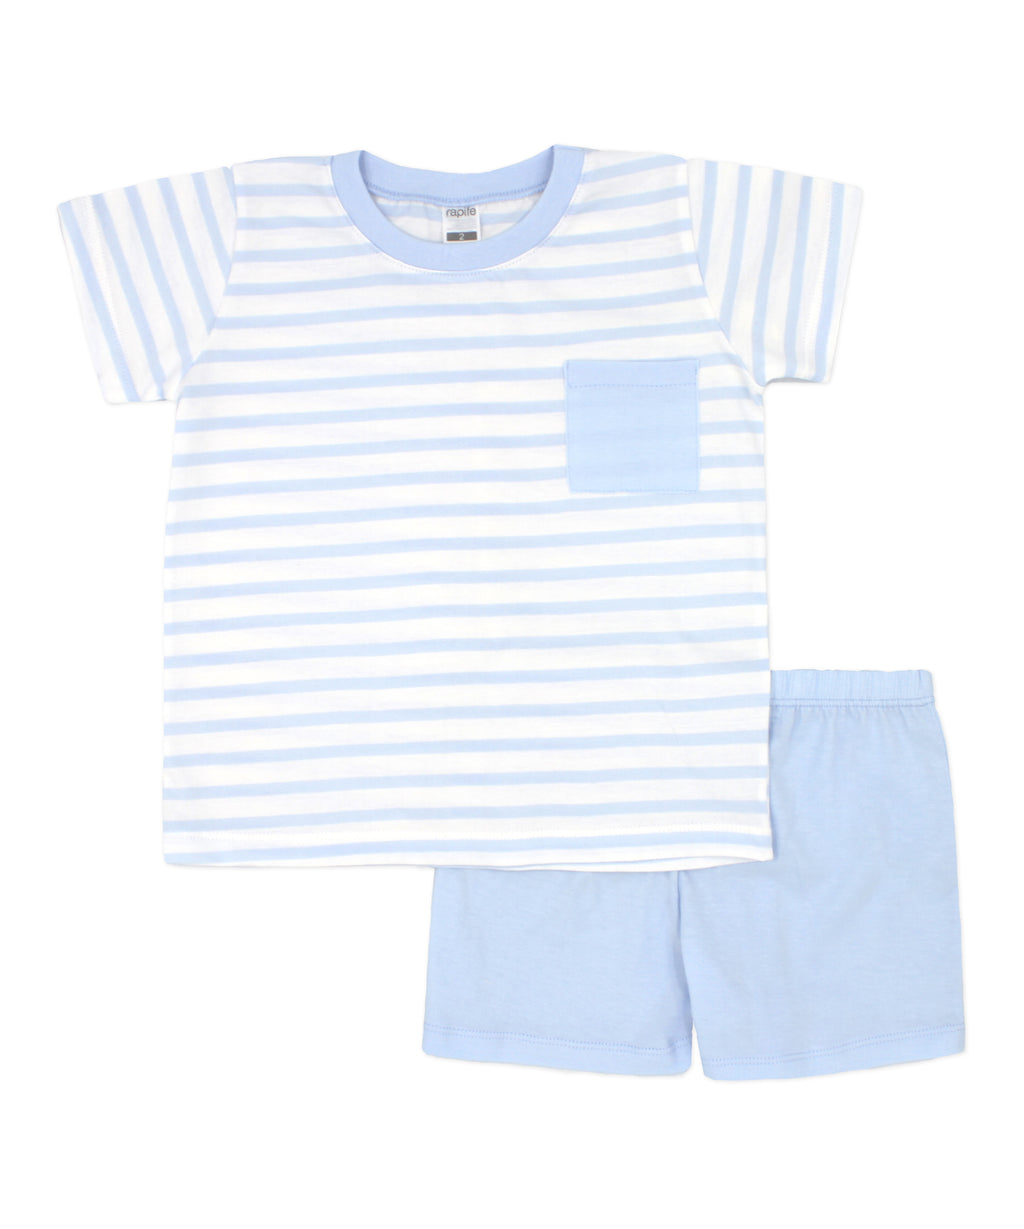 SS24 Rapife Blue & White Stripe Pocket Short Set